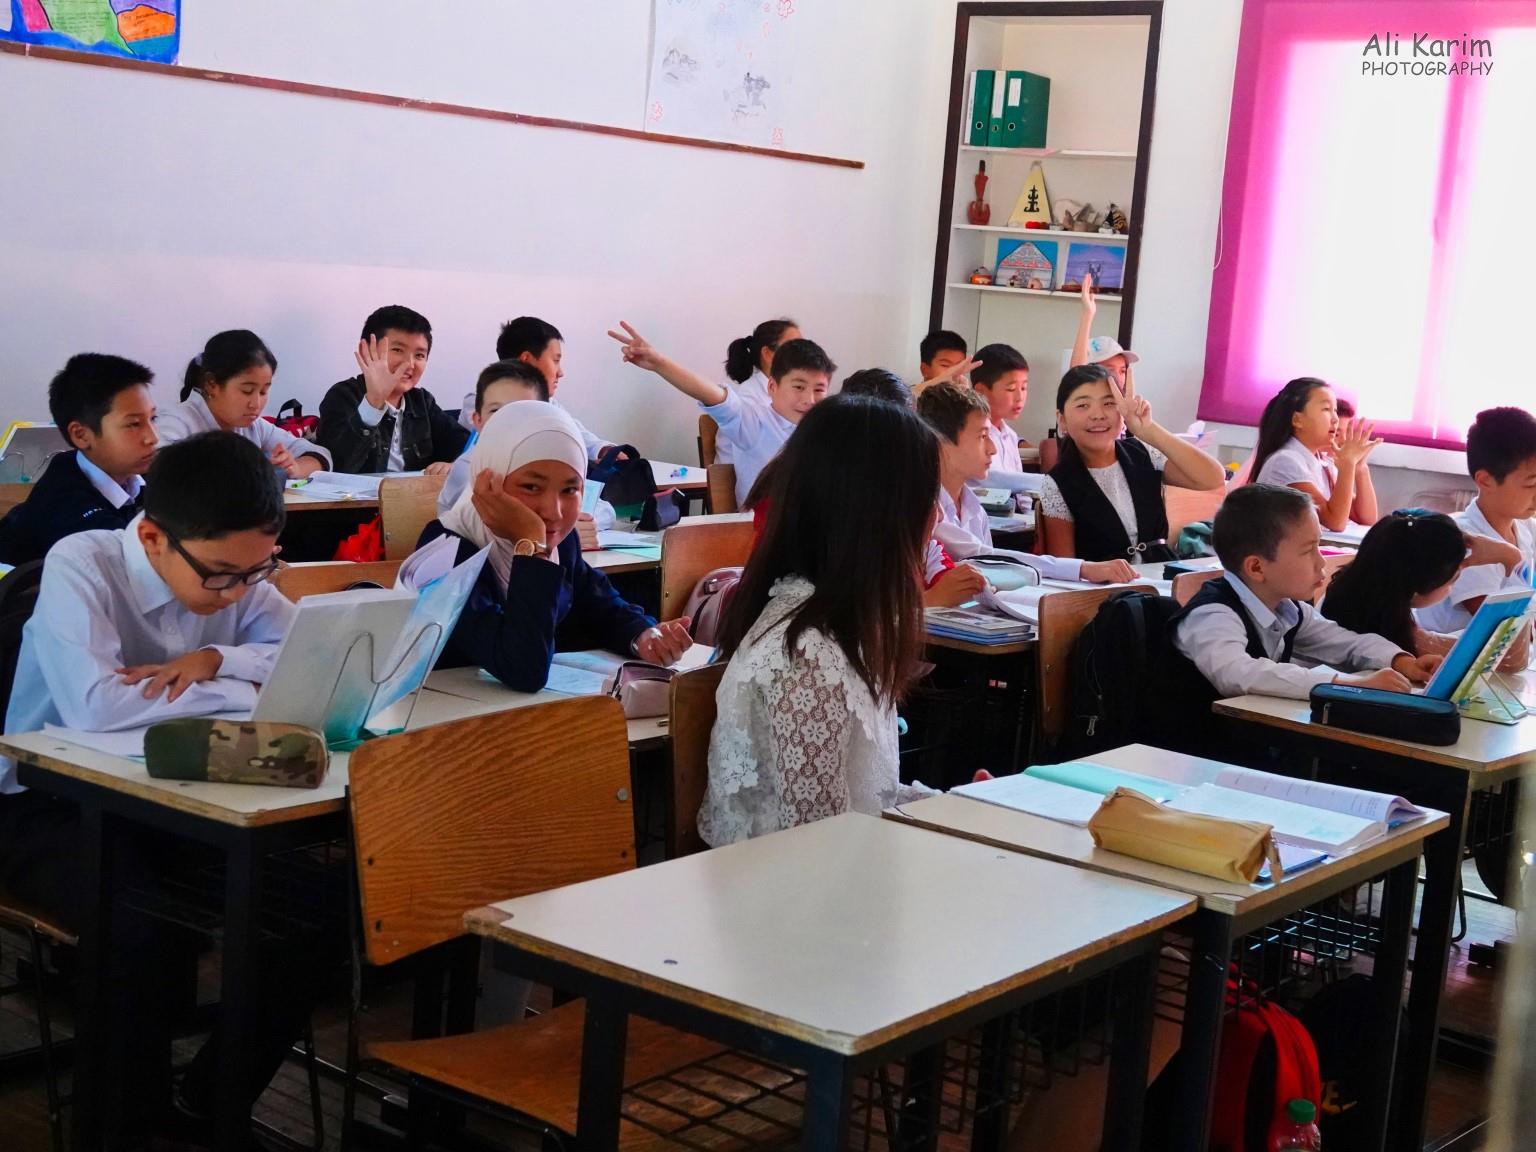 Silk Road 16: More Osh, Kyrgyzstan Typical classroom